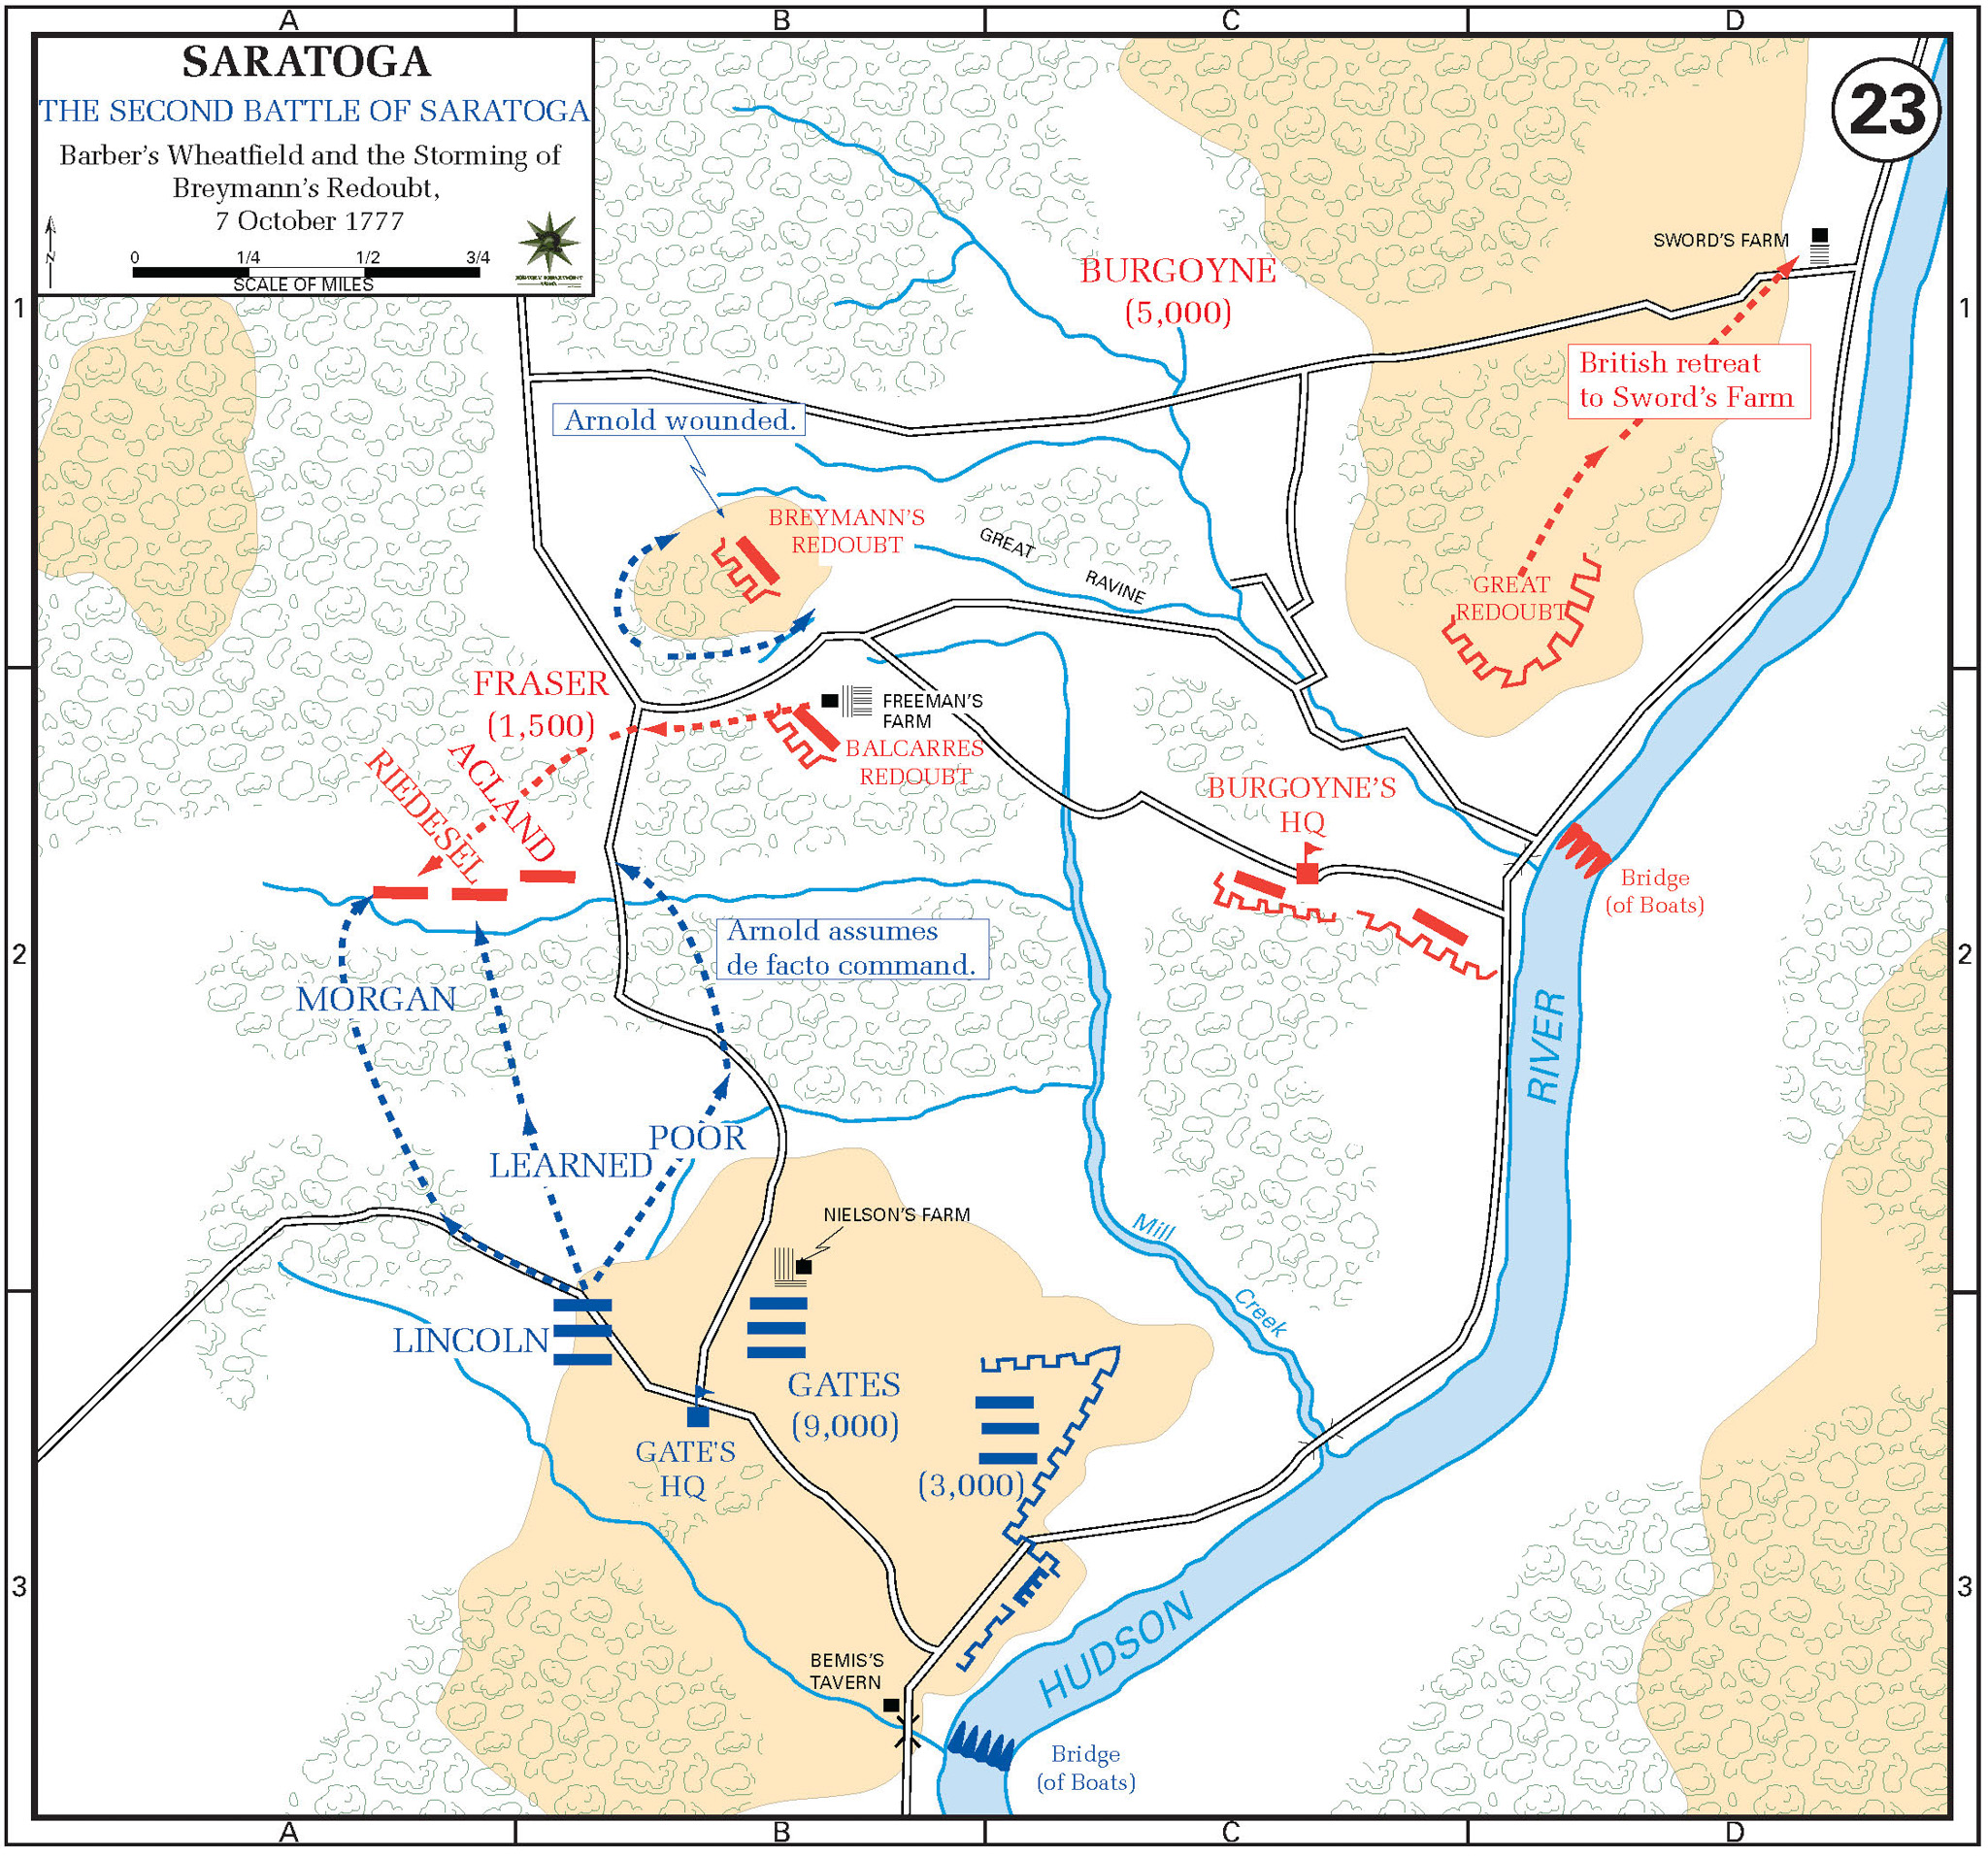 Second Battle of Saratoga on 7 Oct 1777